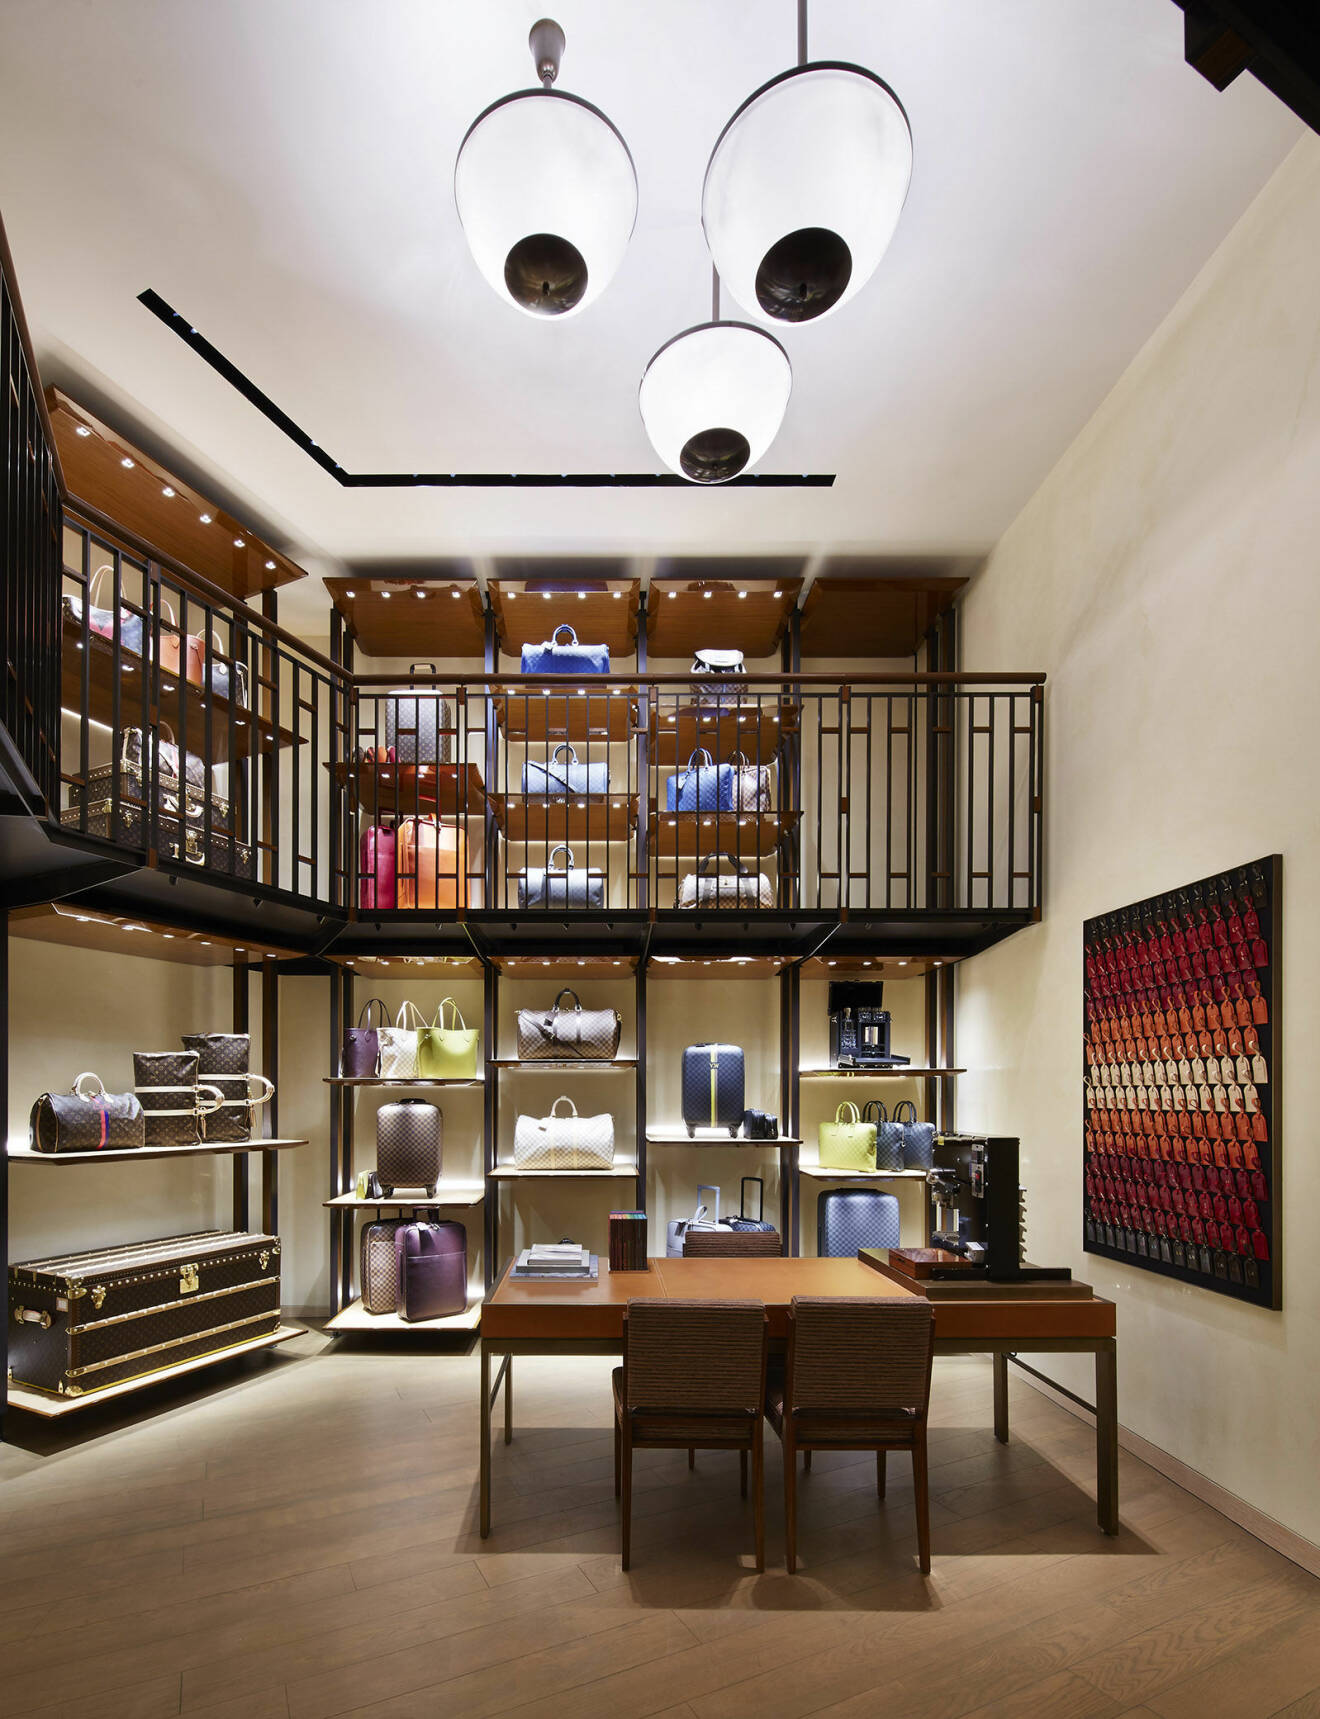 Louis Vuitton nyinviger butiken i Stockholm